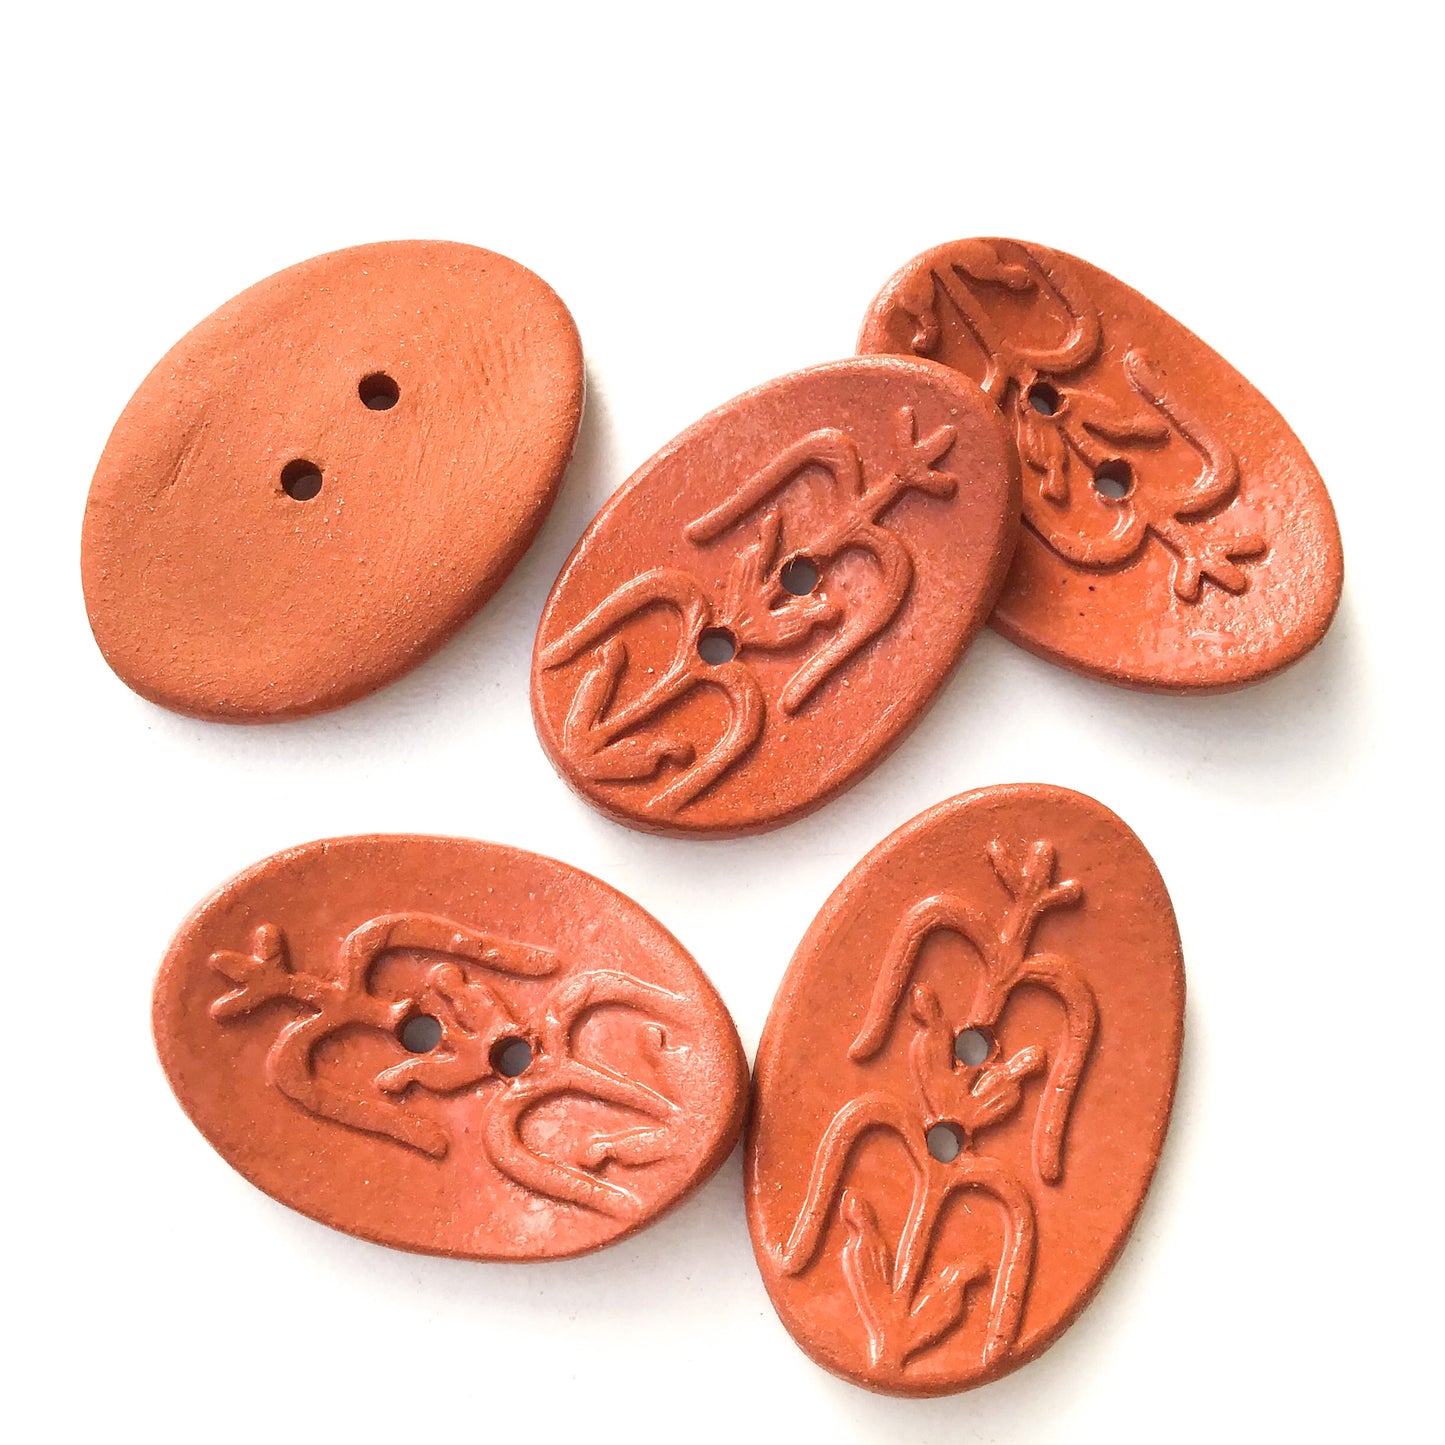 Southwestern Corn Buttons - Reddusg-Brown Ceramic Buttons - 5/8" x 1" - 5 Pack